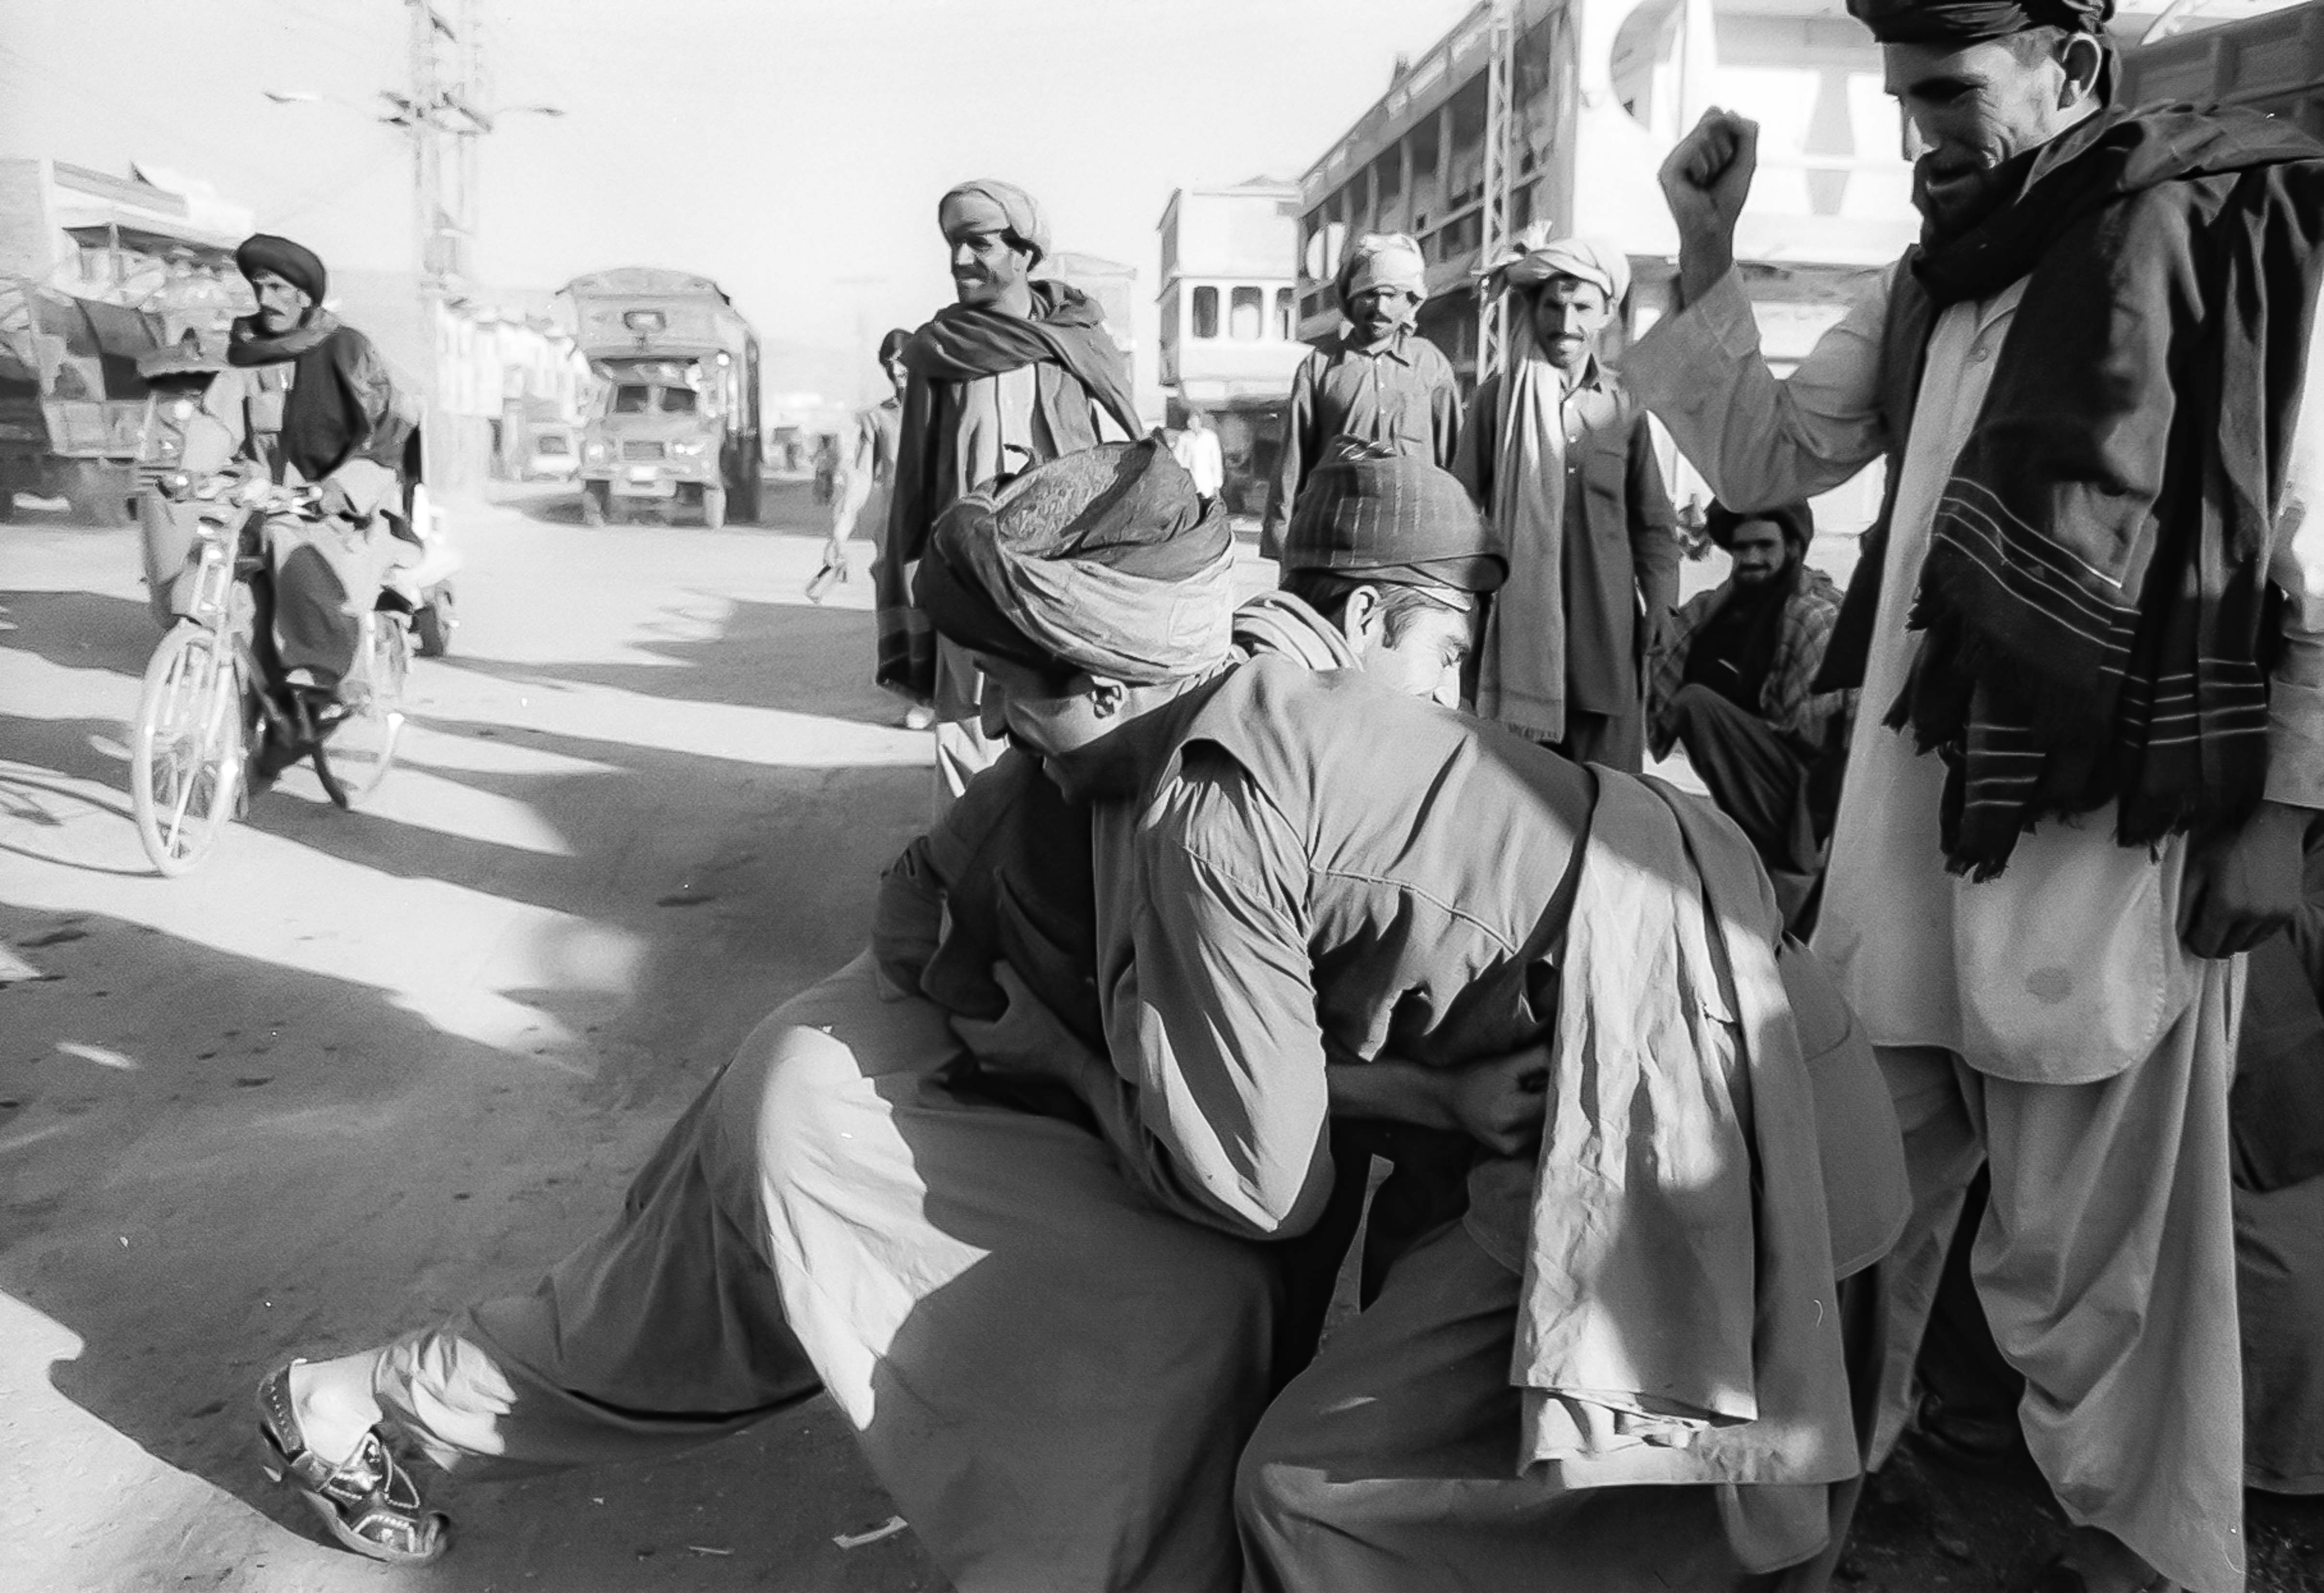 Pakistan, Wrestling Match In The Street, 1984